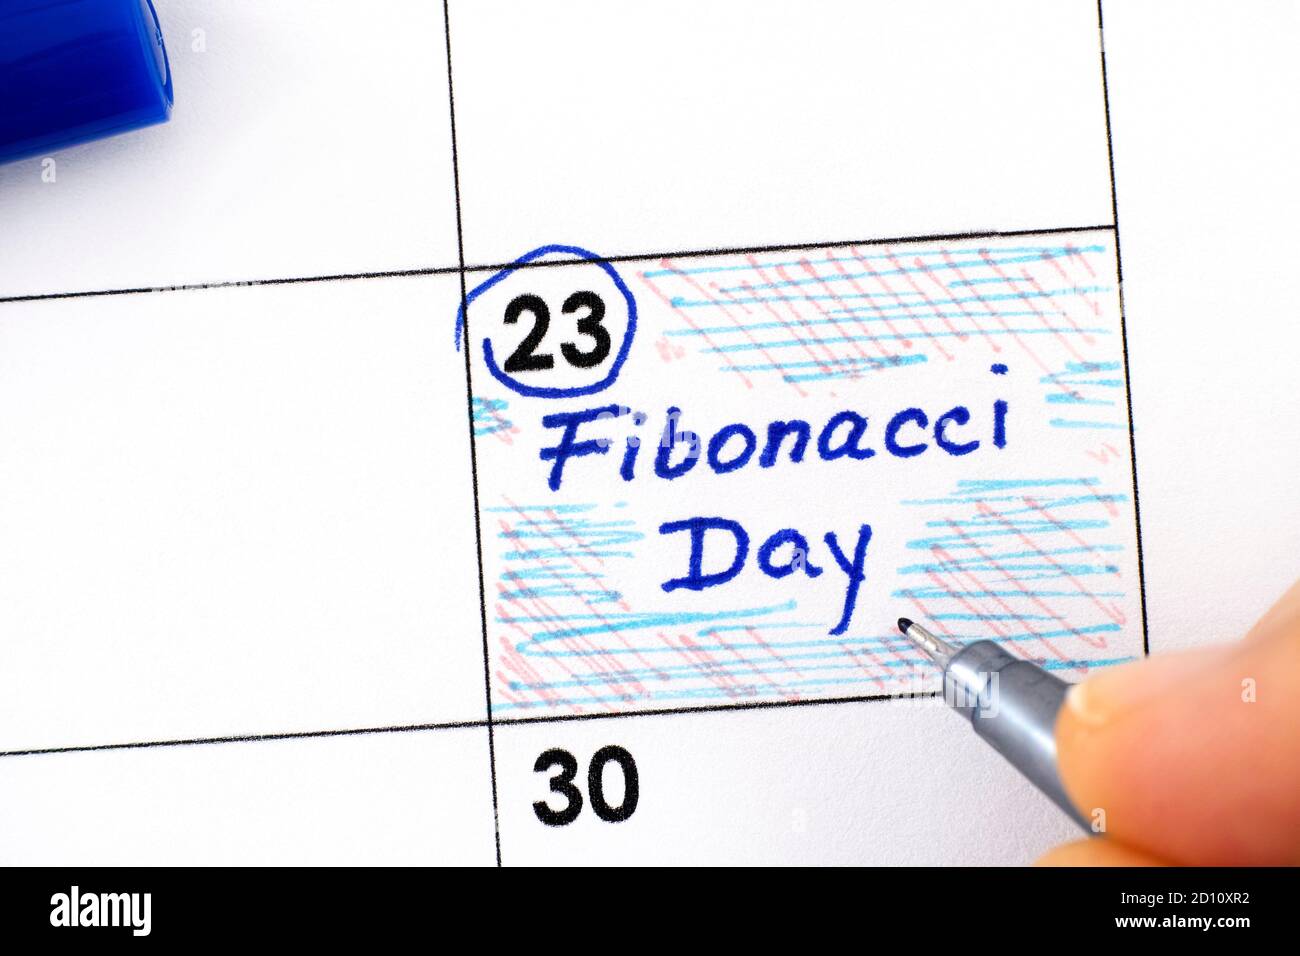 Woman fingers with pen writing reminder Fibonacci Day in calendar. November 23. Stock Photo